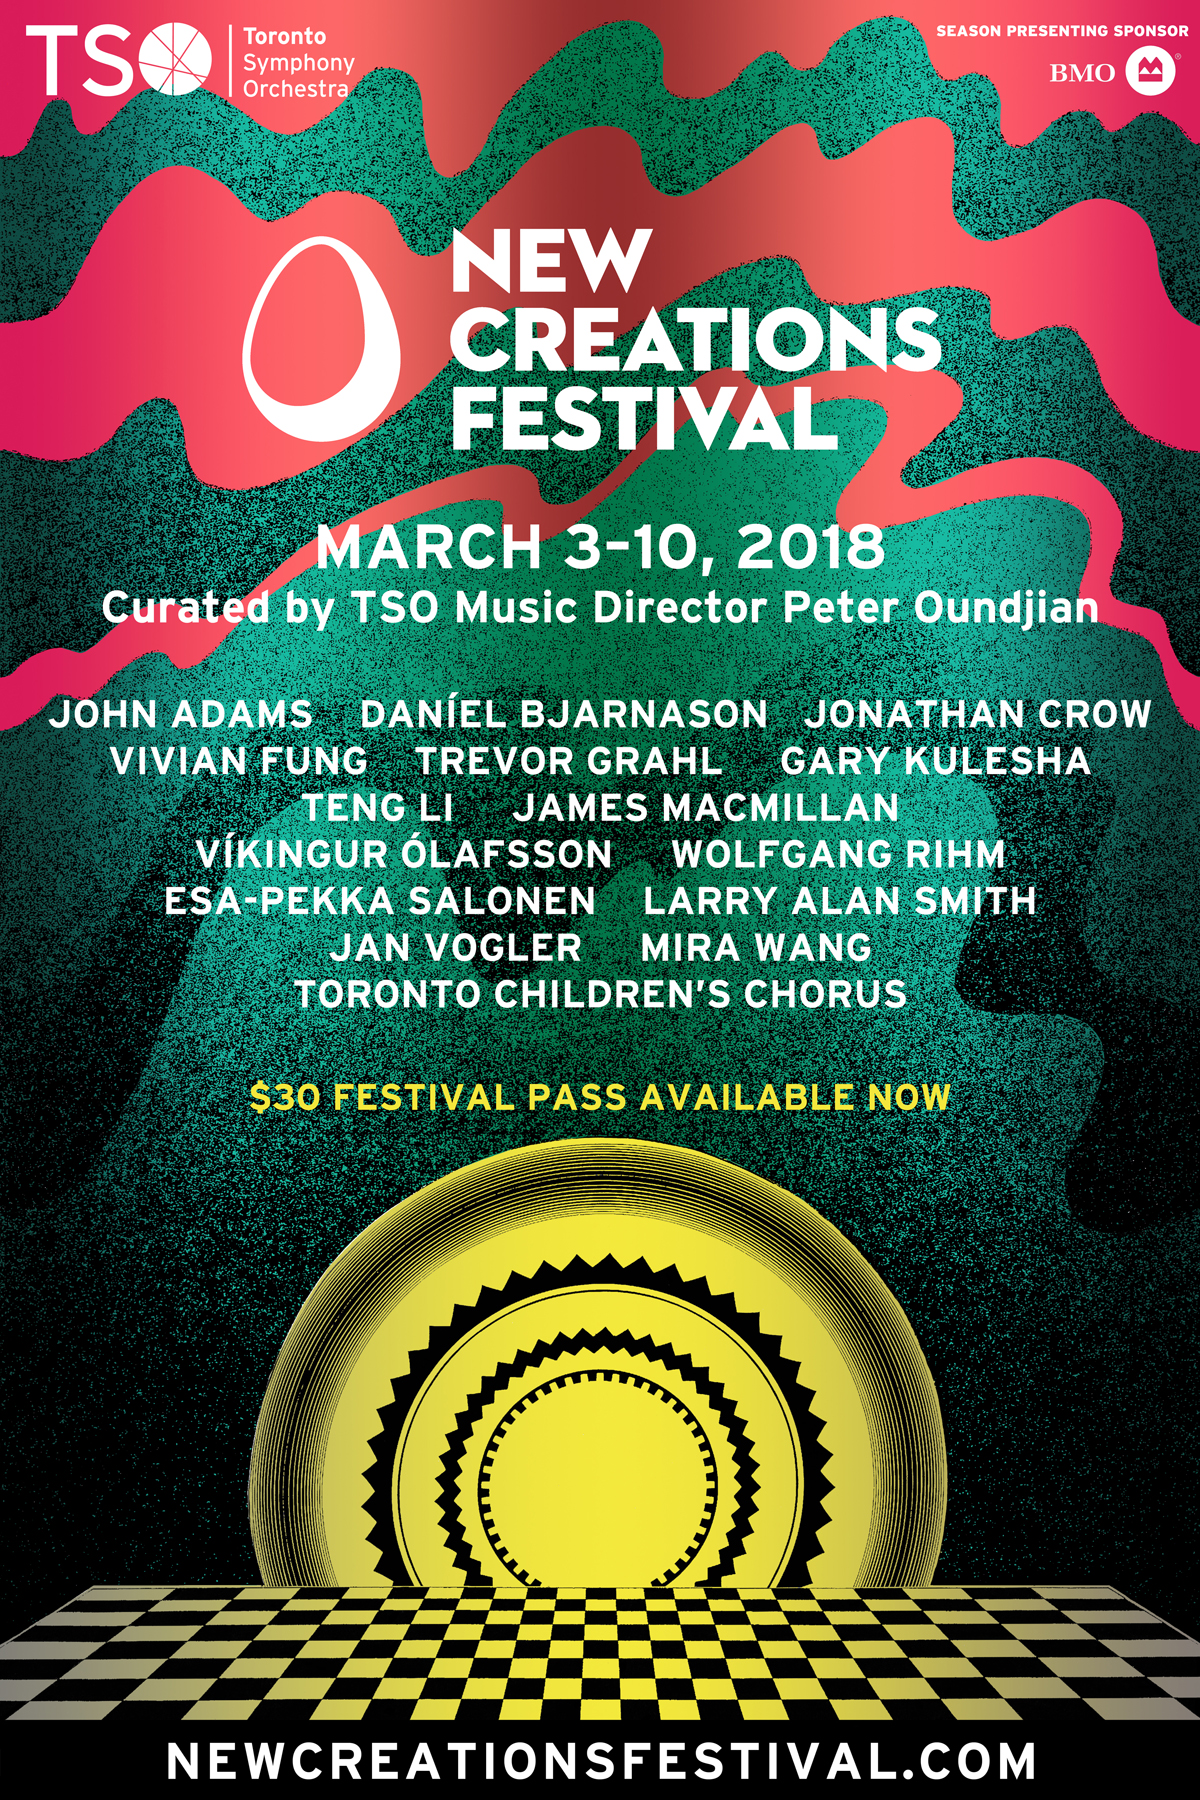  New Creations Festival 2018  Toronto Symphony Orchestra    